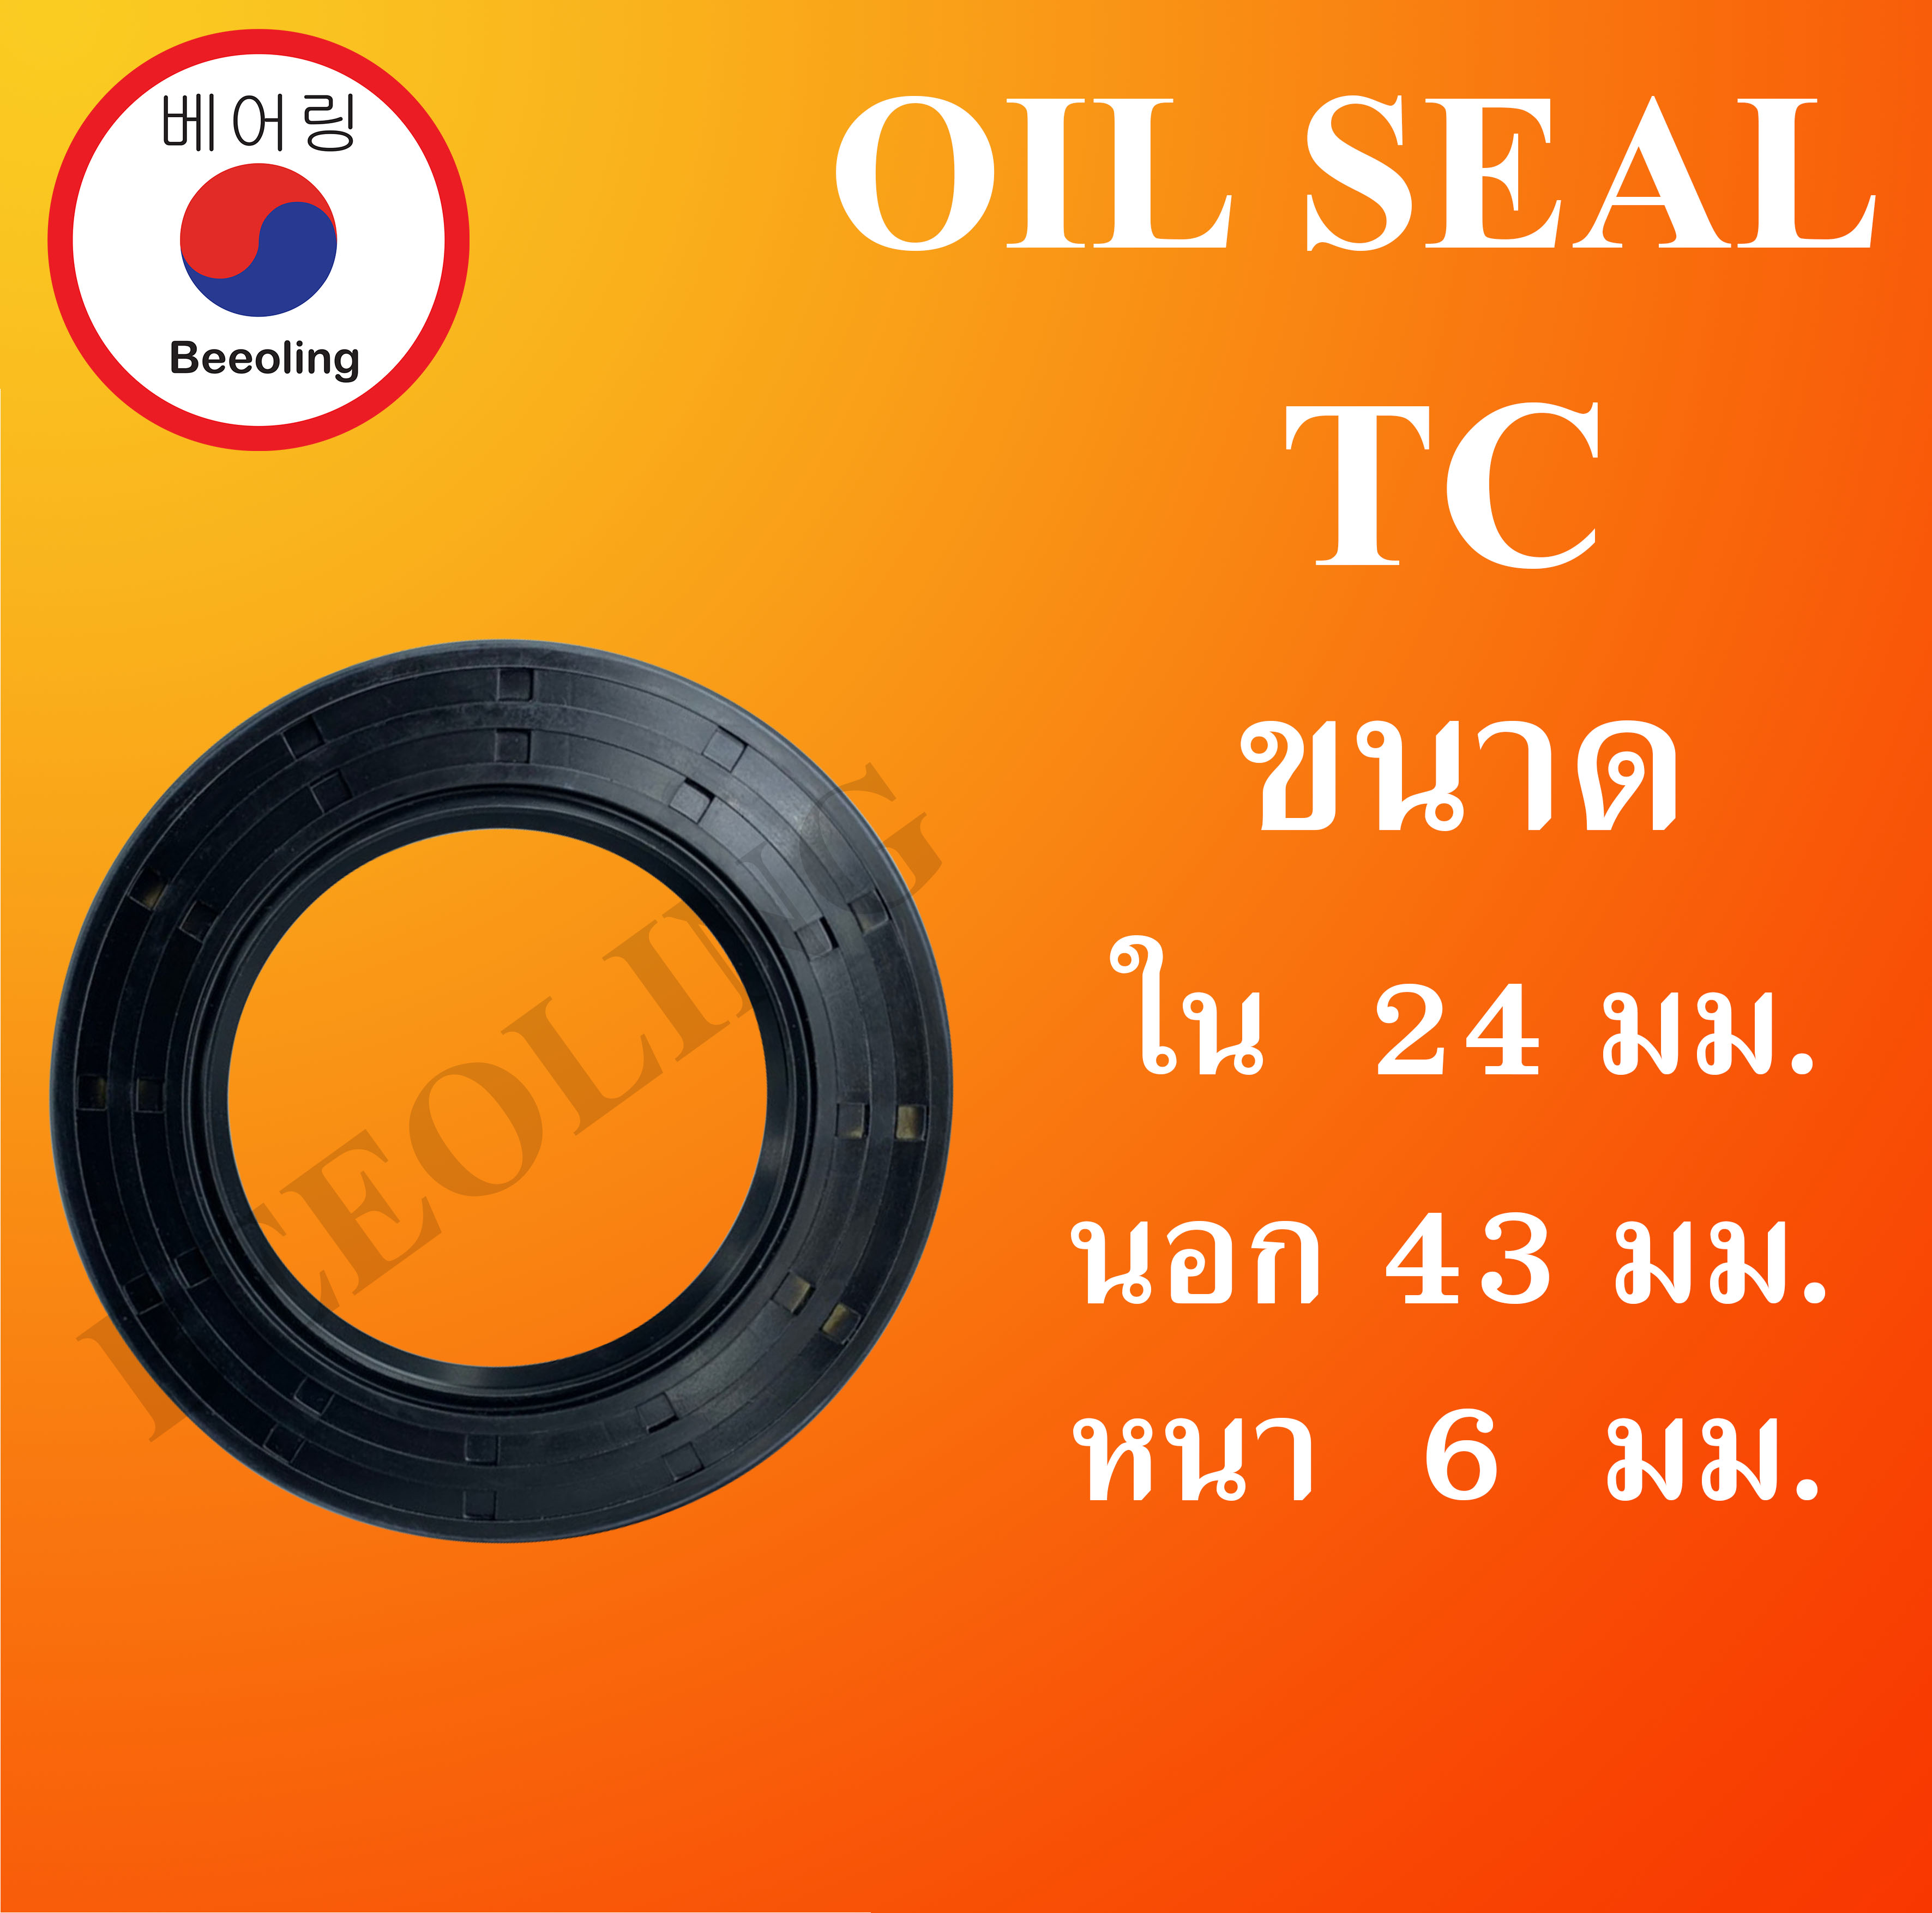 TC24-43-6 ออยซีล ซีลยาง ซีลกันน้ำมัน ซีลกันซึม ซีลกันฝุ่น Oil seal ขนาด ใน 24 นอก 43 หนา 6 ( มม ) TC 24-43-6 โดย Beeoling shop